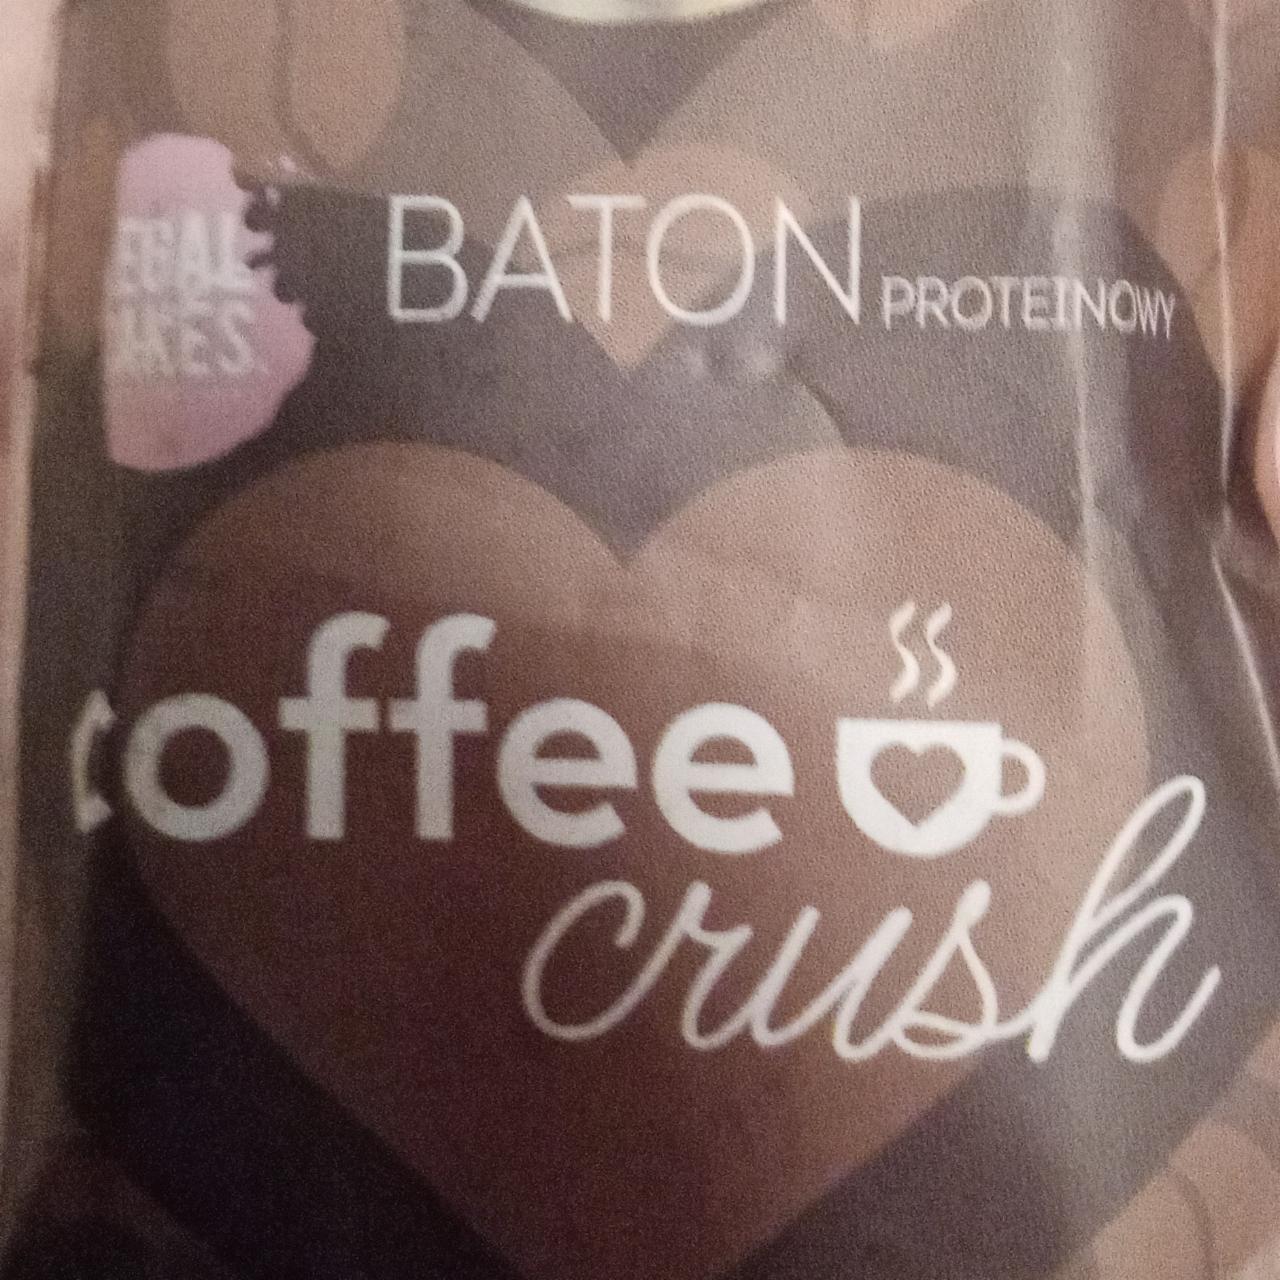 Fotografie - Baton proteinowy Coffee Crush Legal Cakes